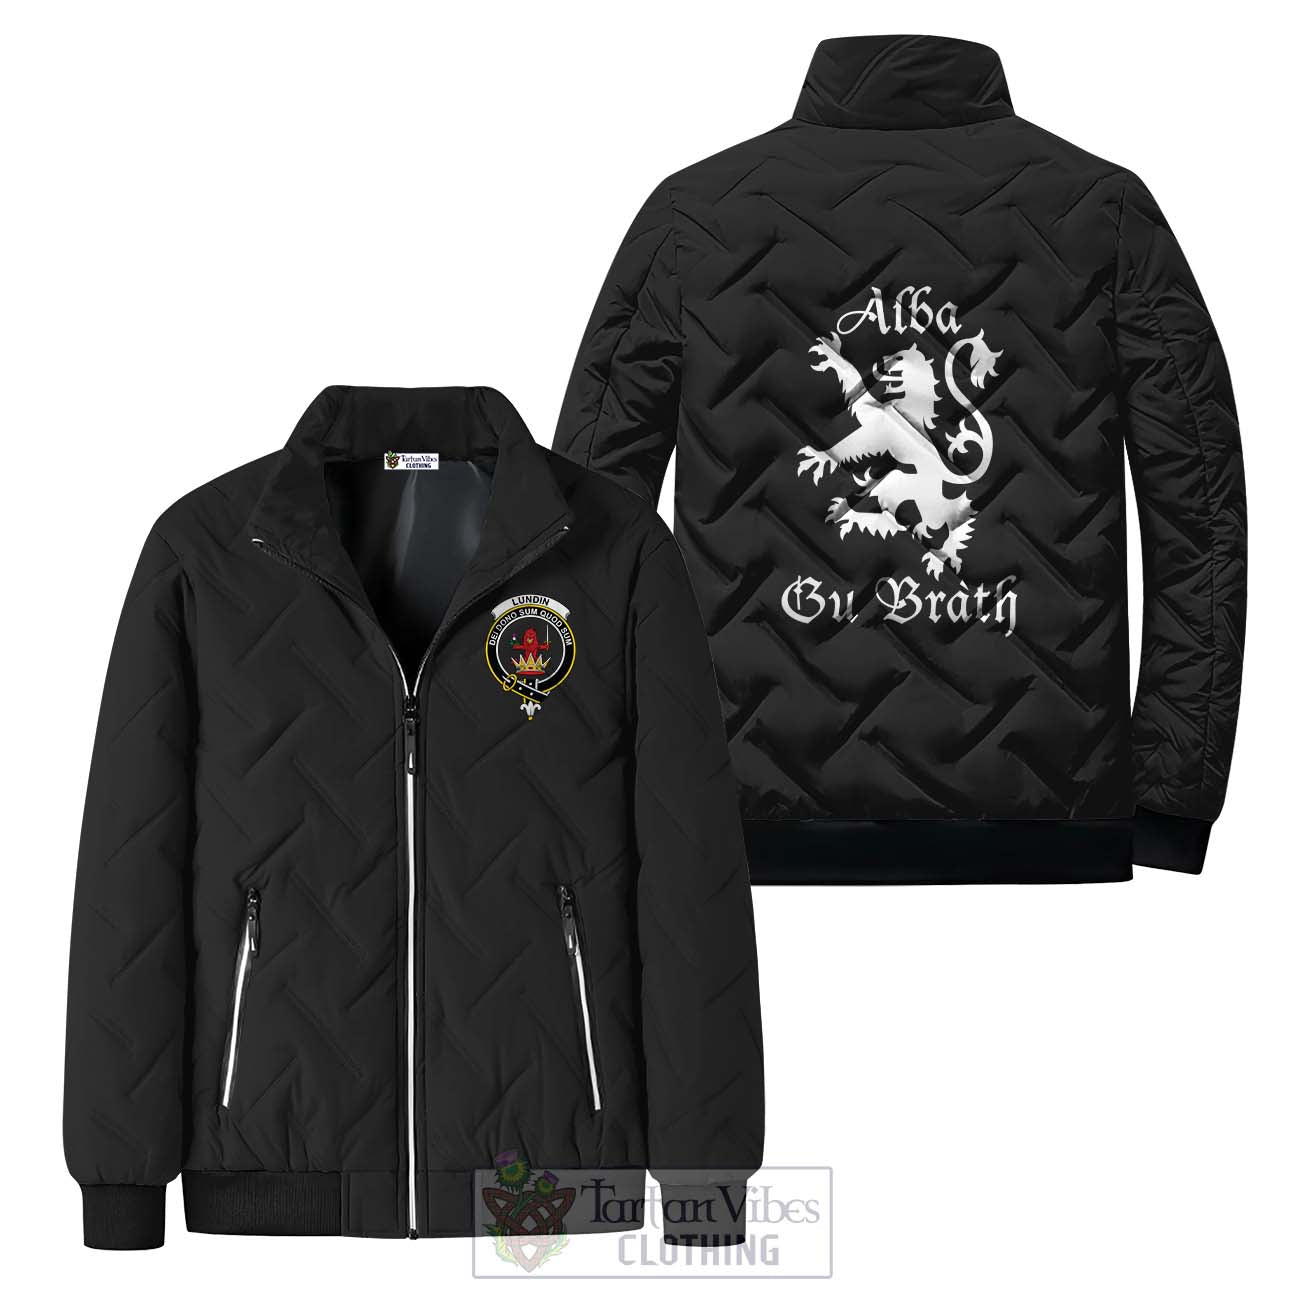 Tartan Vibes Clothing Lundin Family Crest Padded Cotton Jacket Lion Rampant Alba Gu Brath Style